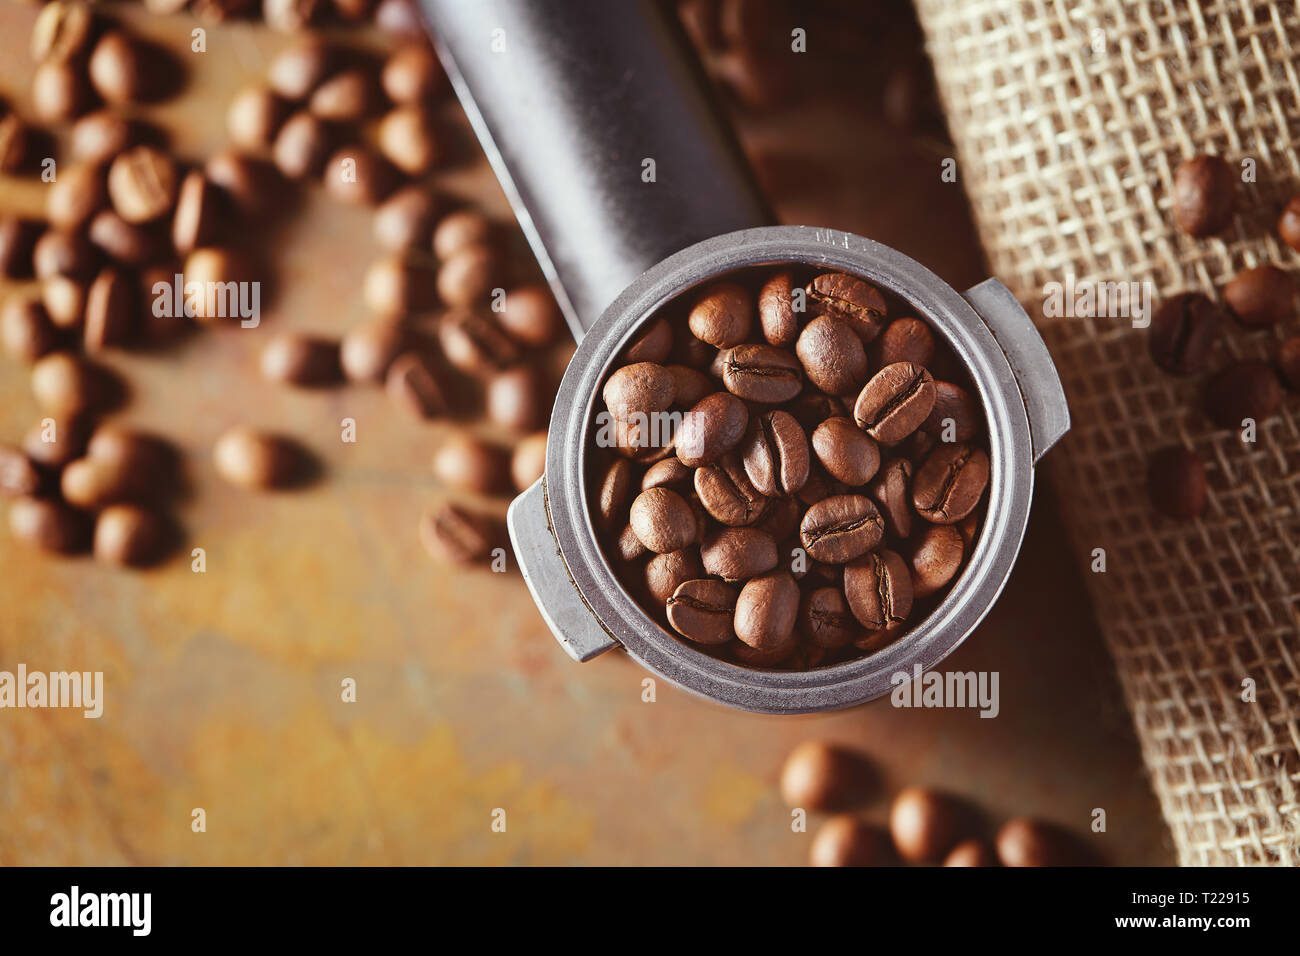 Espresso coffee machine handle with coffee beans Stock Photo